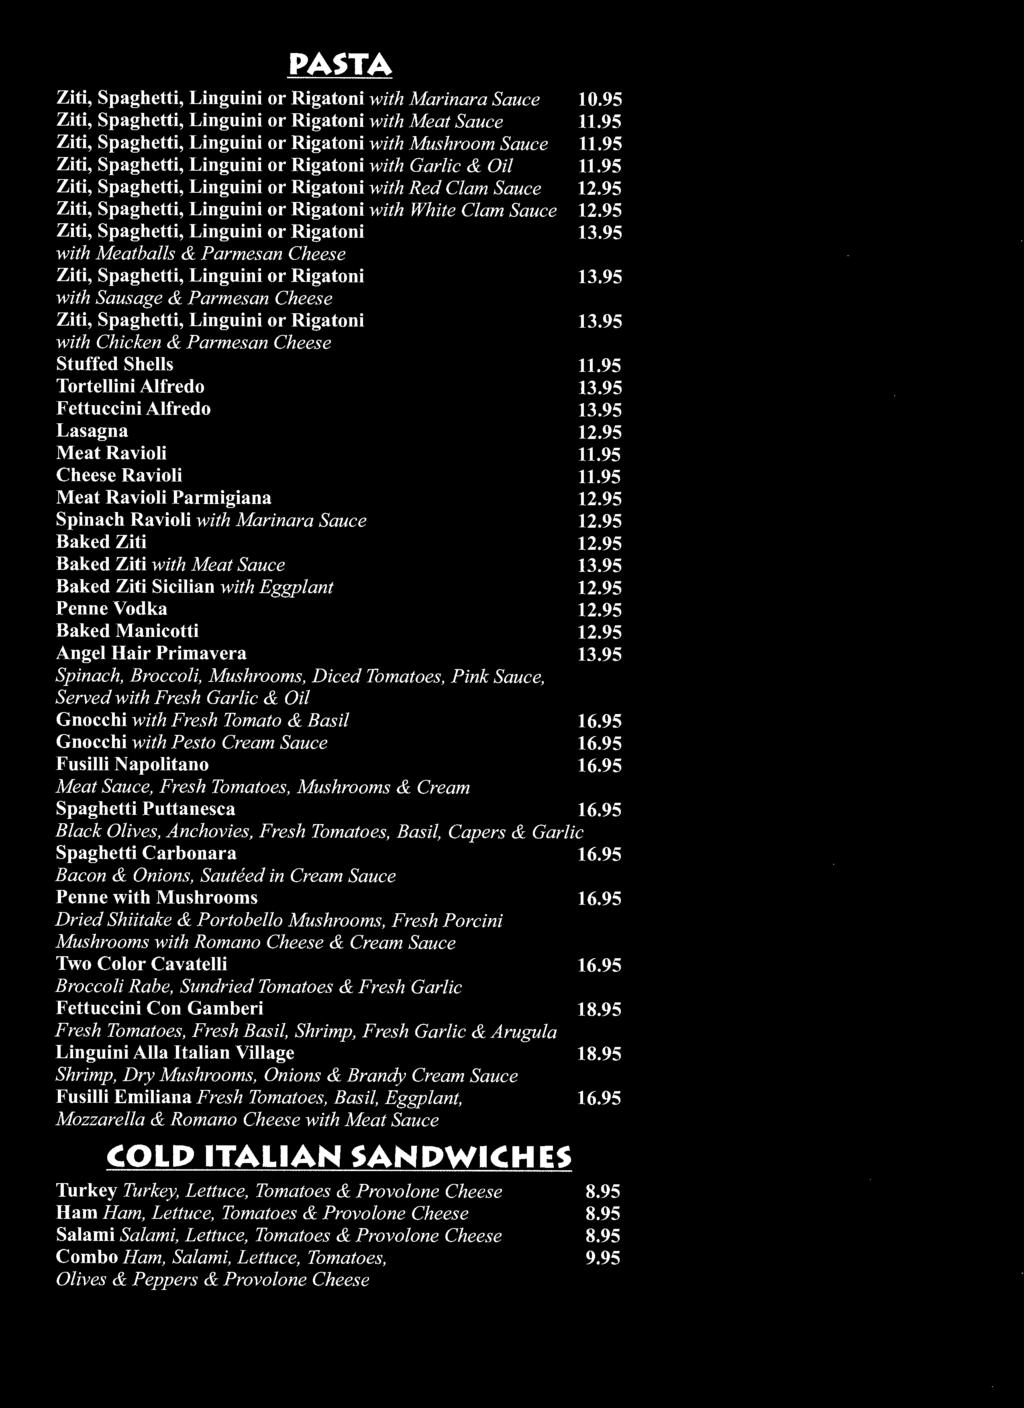 Manicotti Angel Hair Primavera Spinach, Broccoli, Mushrooms, Diced Tomatoes, Pink Sauce, Served with Fresh Garlic & Oil Gnocchi with Fresh Tomato & Basil Gnocchi with Pesta Cream Sauce Fusilli